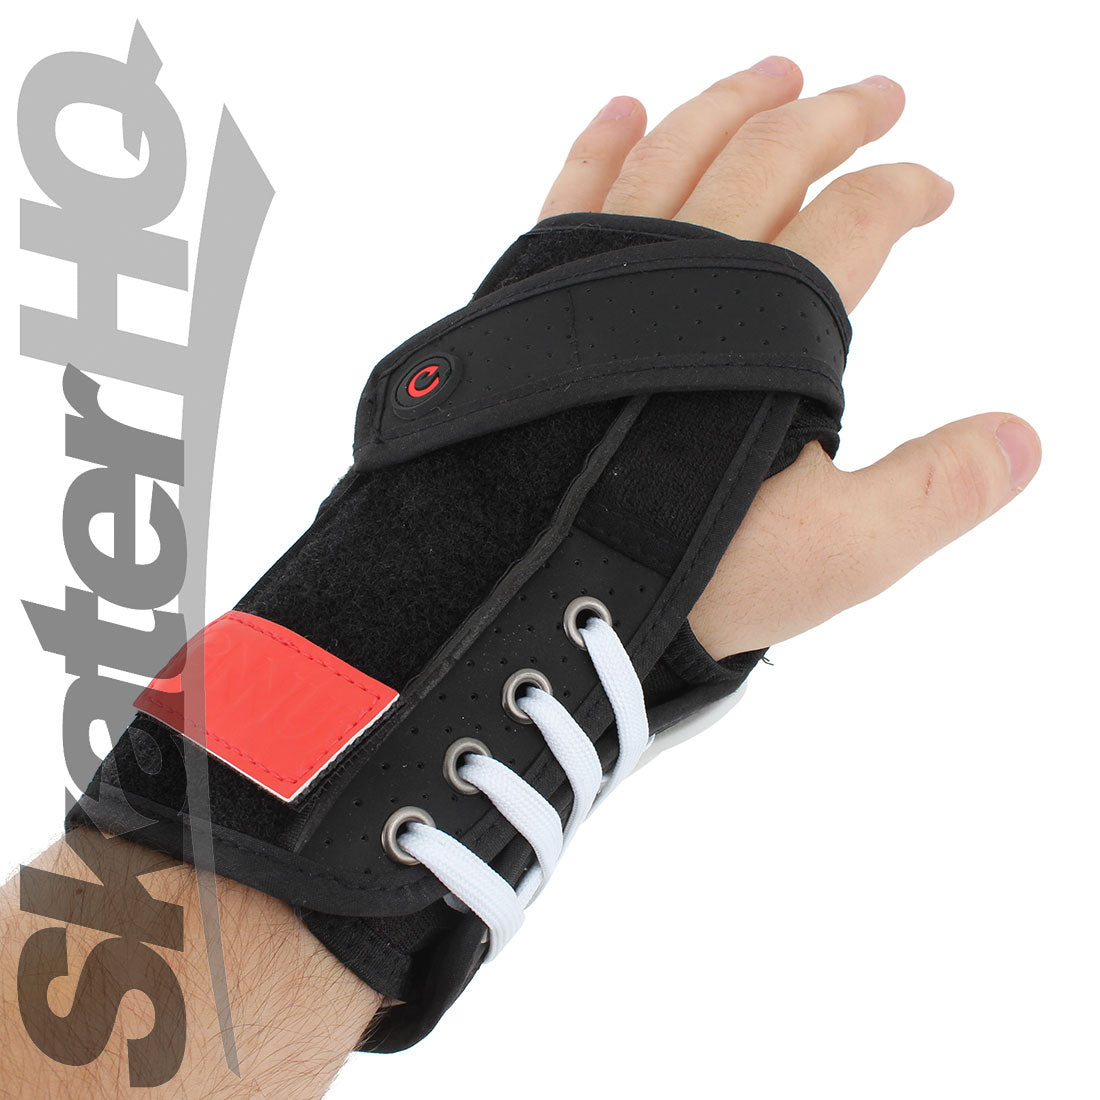 Ennui All-Round Wrist Brace Protective Gear